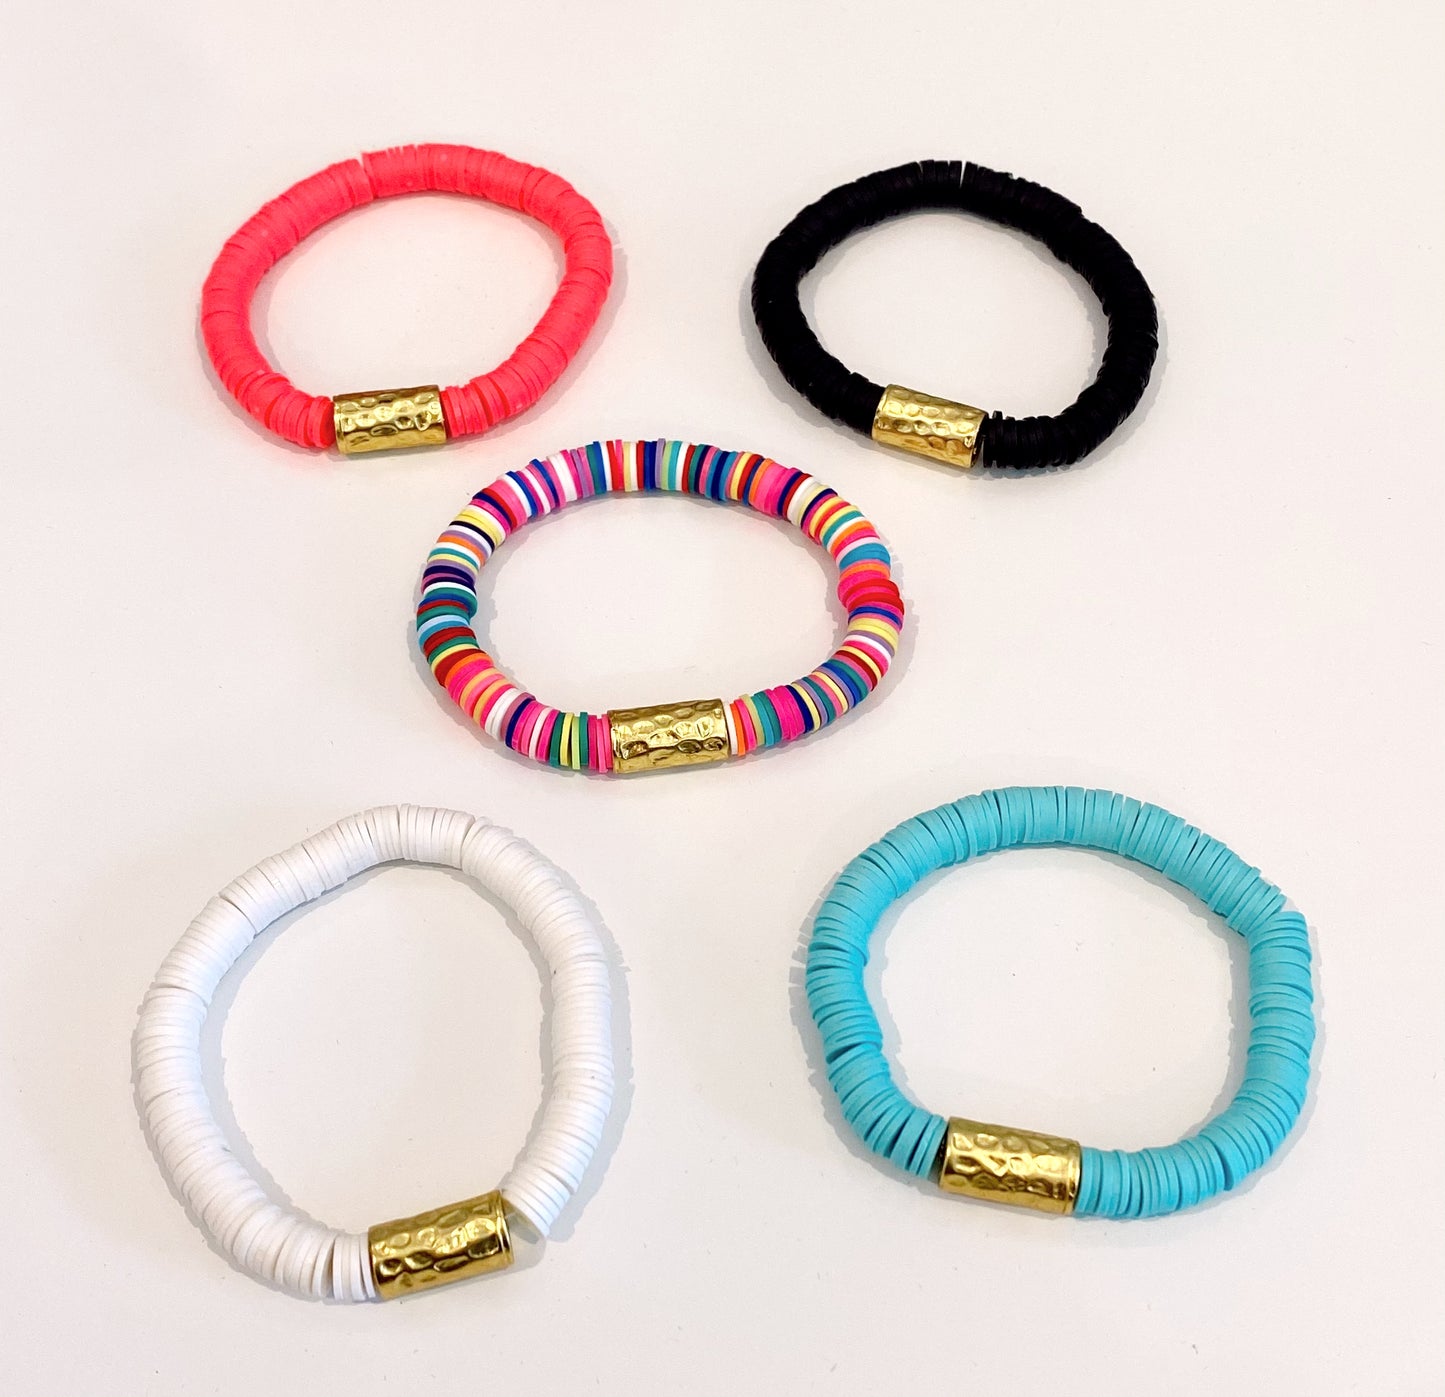 Colorful rubber bracelets